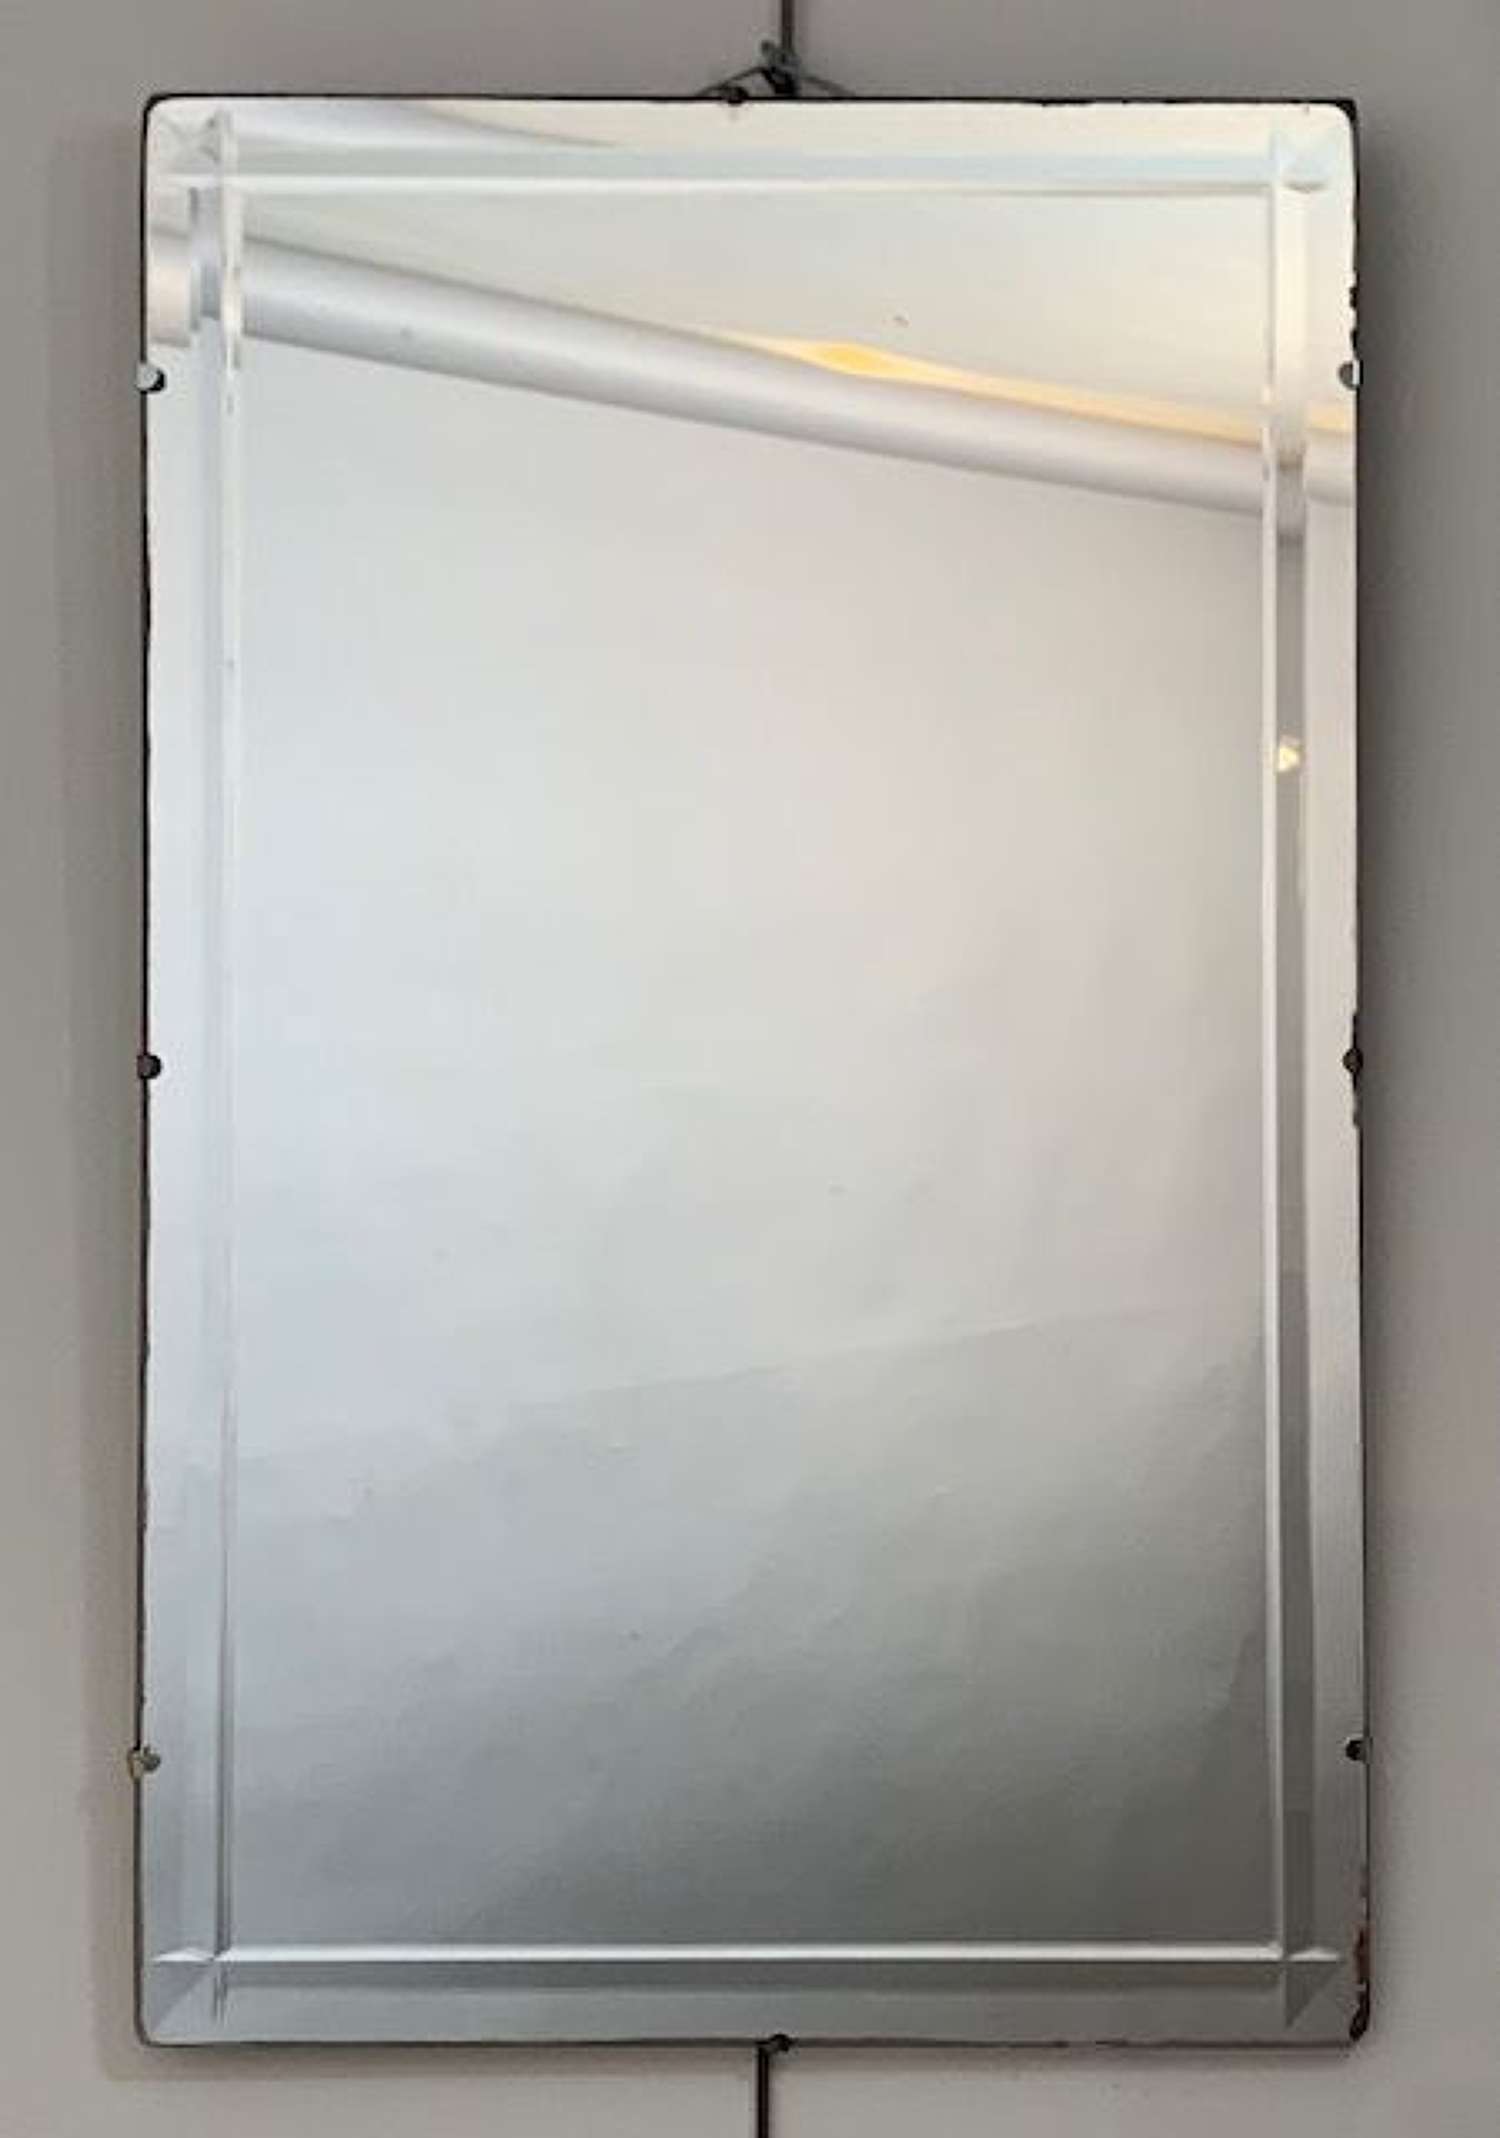 Early C20th frameless mirror